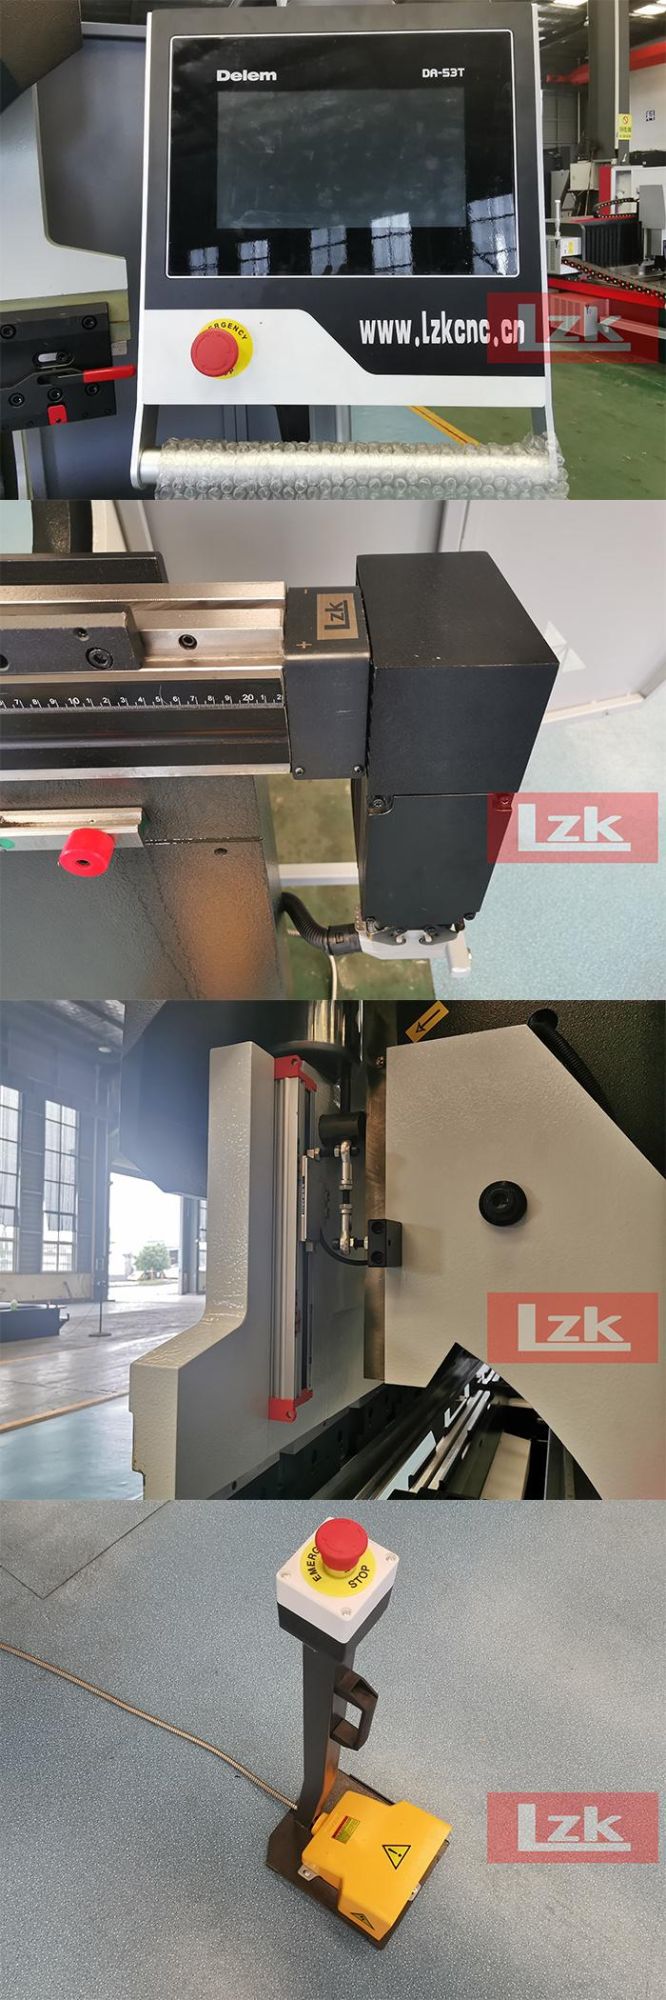 Hpb Economical 110t3200 CNC Sheet Metal Press Bending Machine